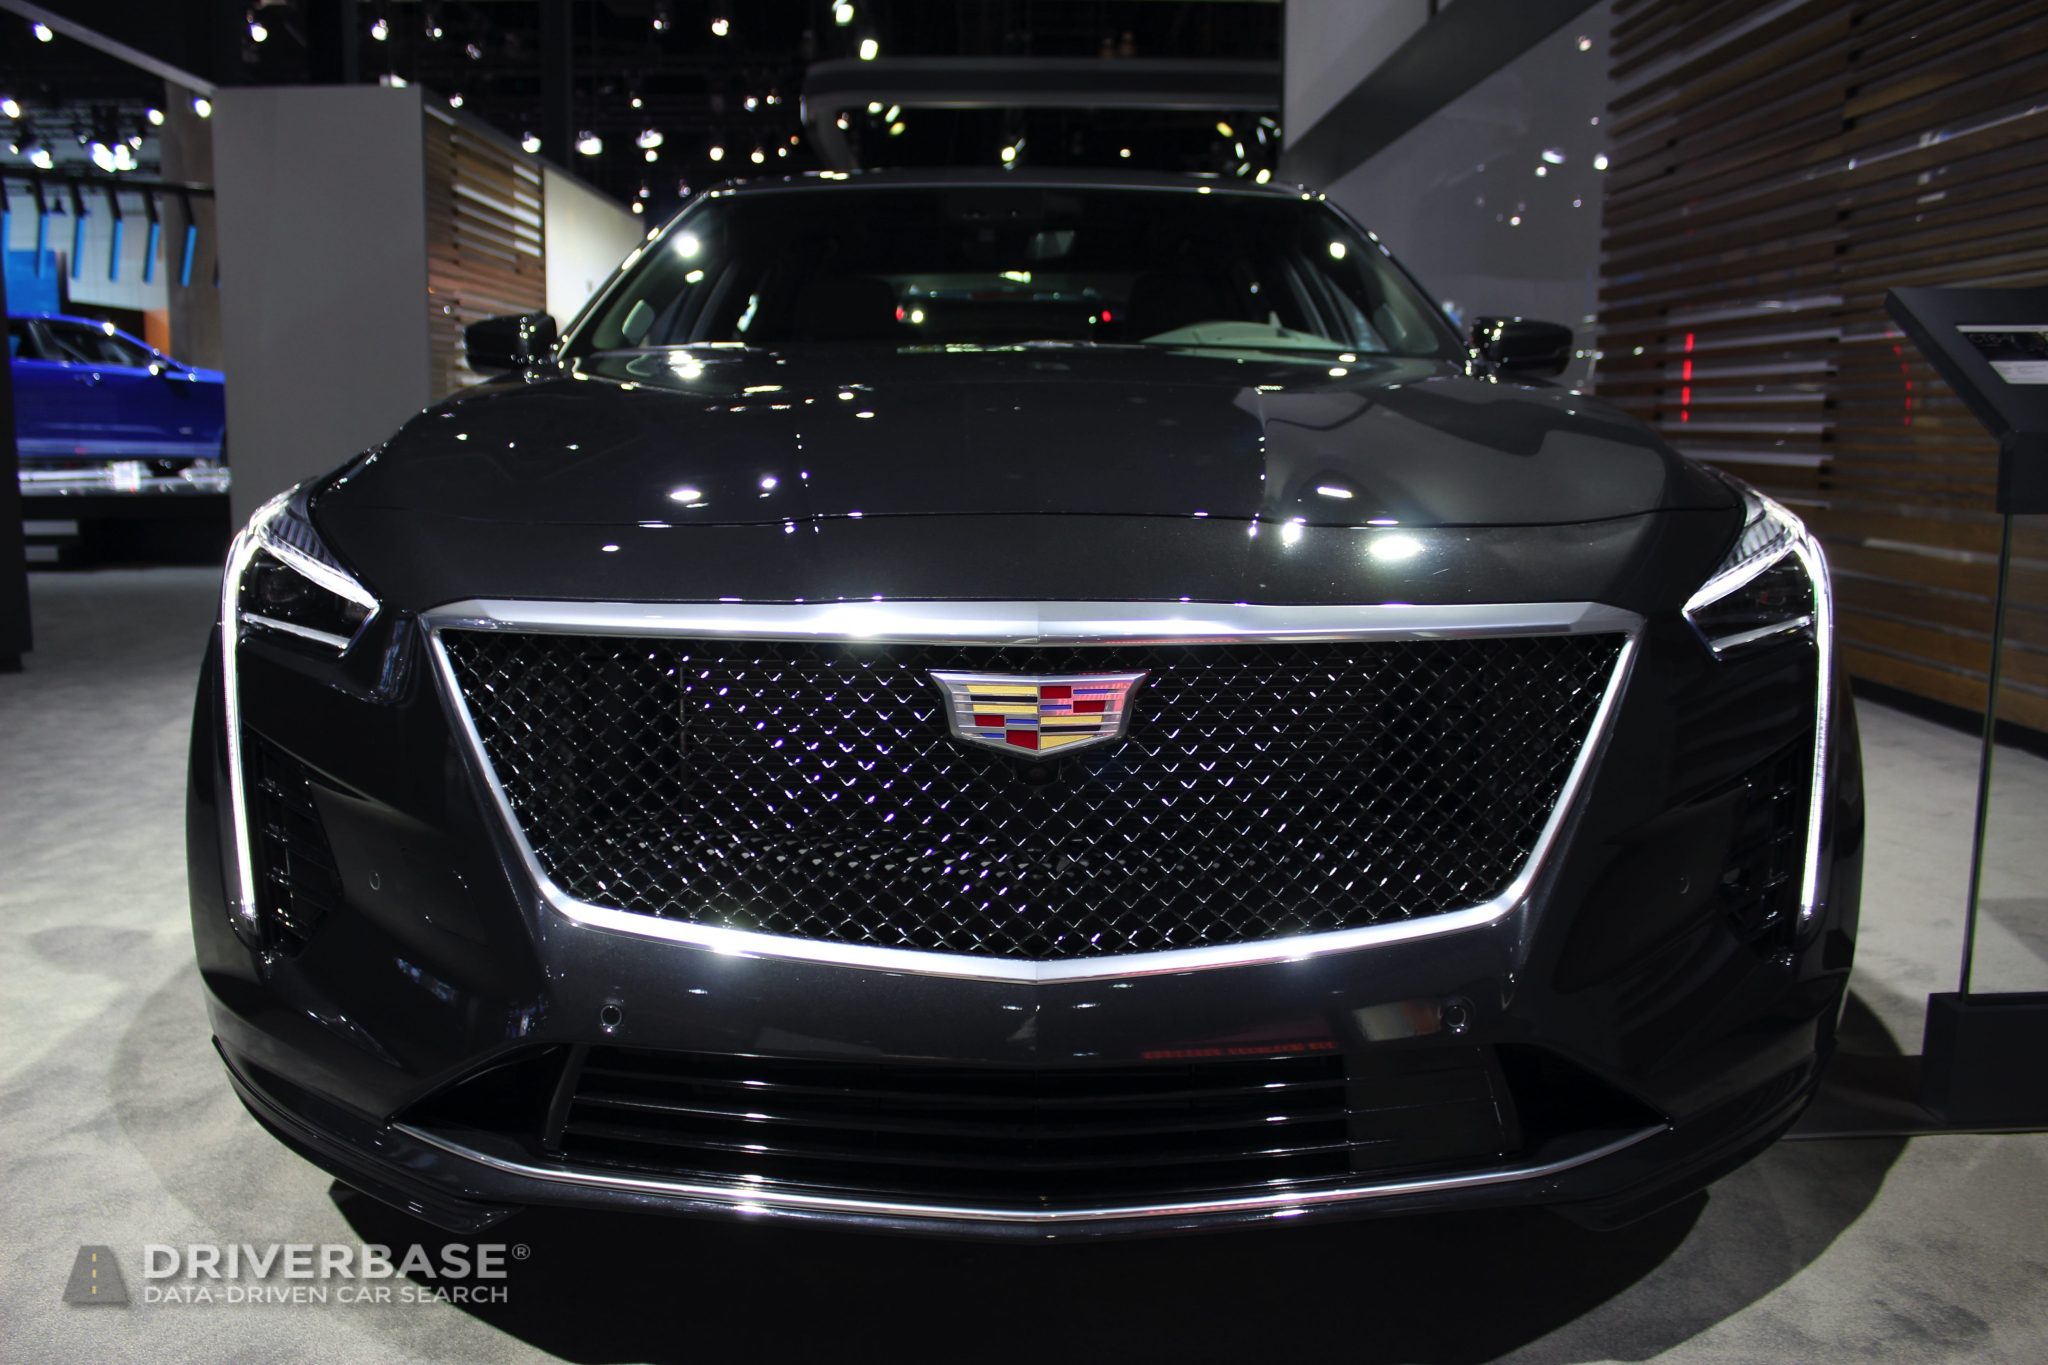 2020 Cadillac CT6 V at the 2019 Los Angeles Auto Show